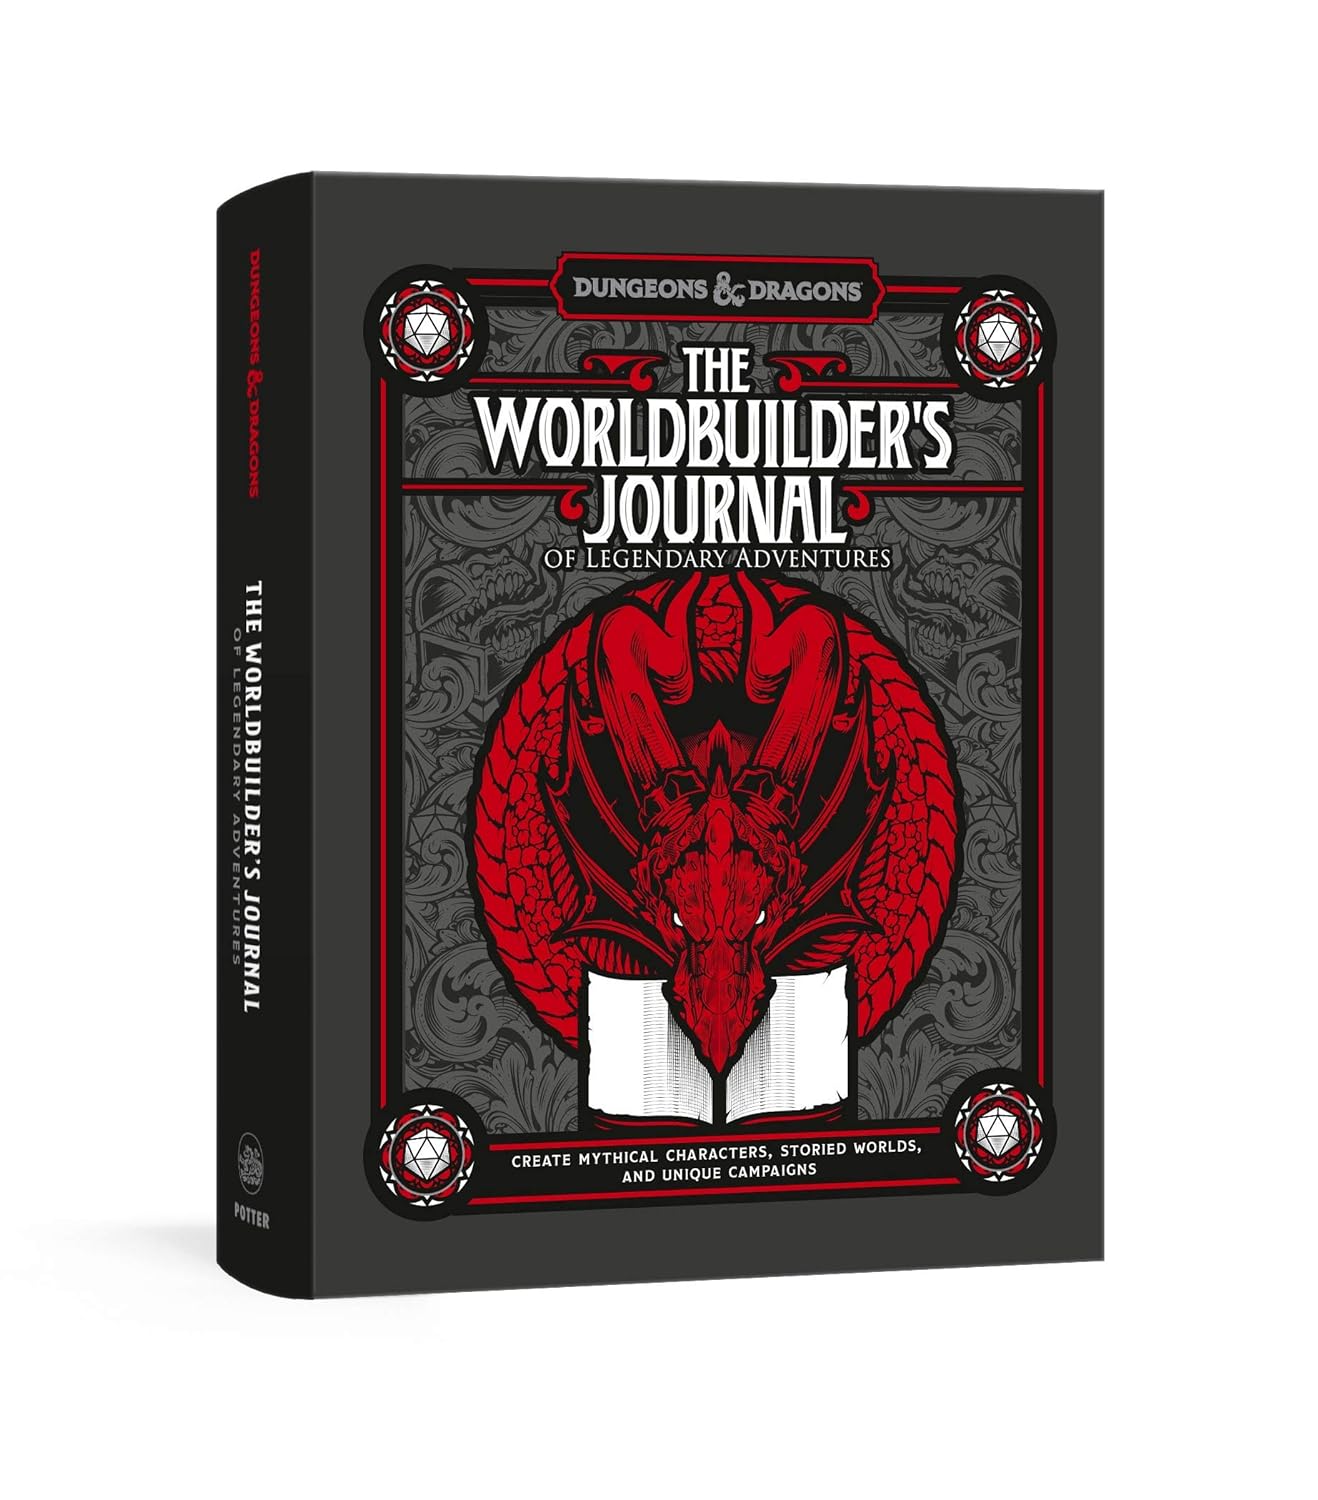 D&D: The Worldbuilder's Journal ..of Legendary Adventures